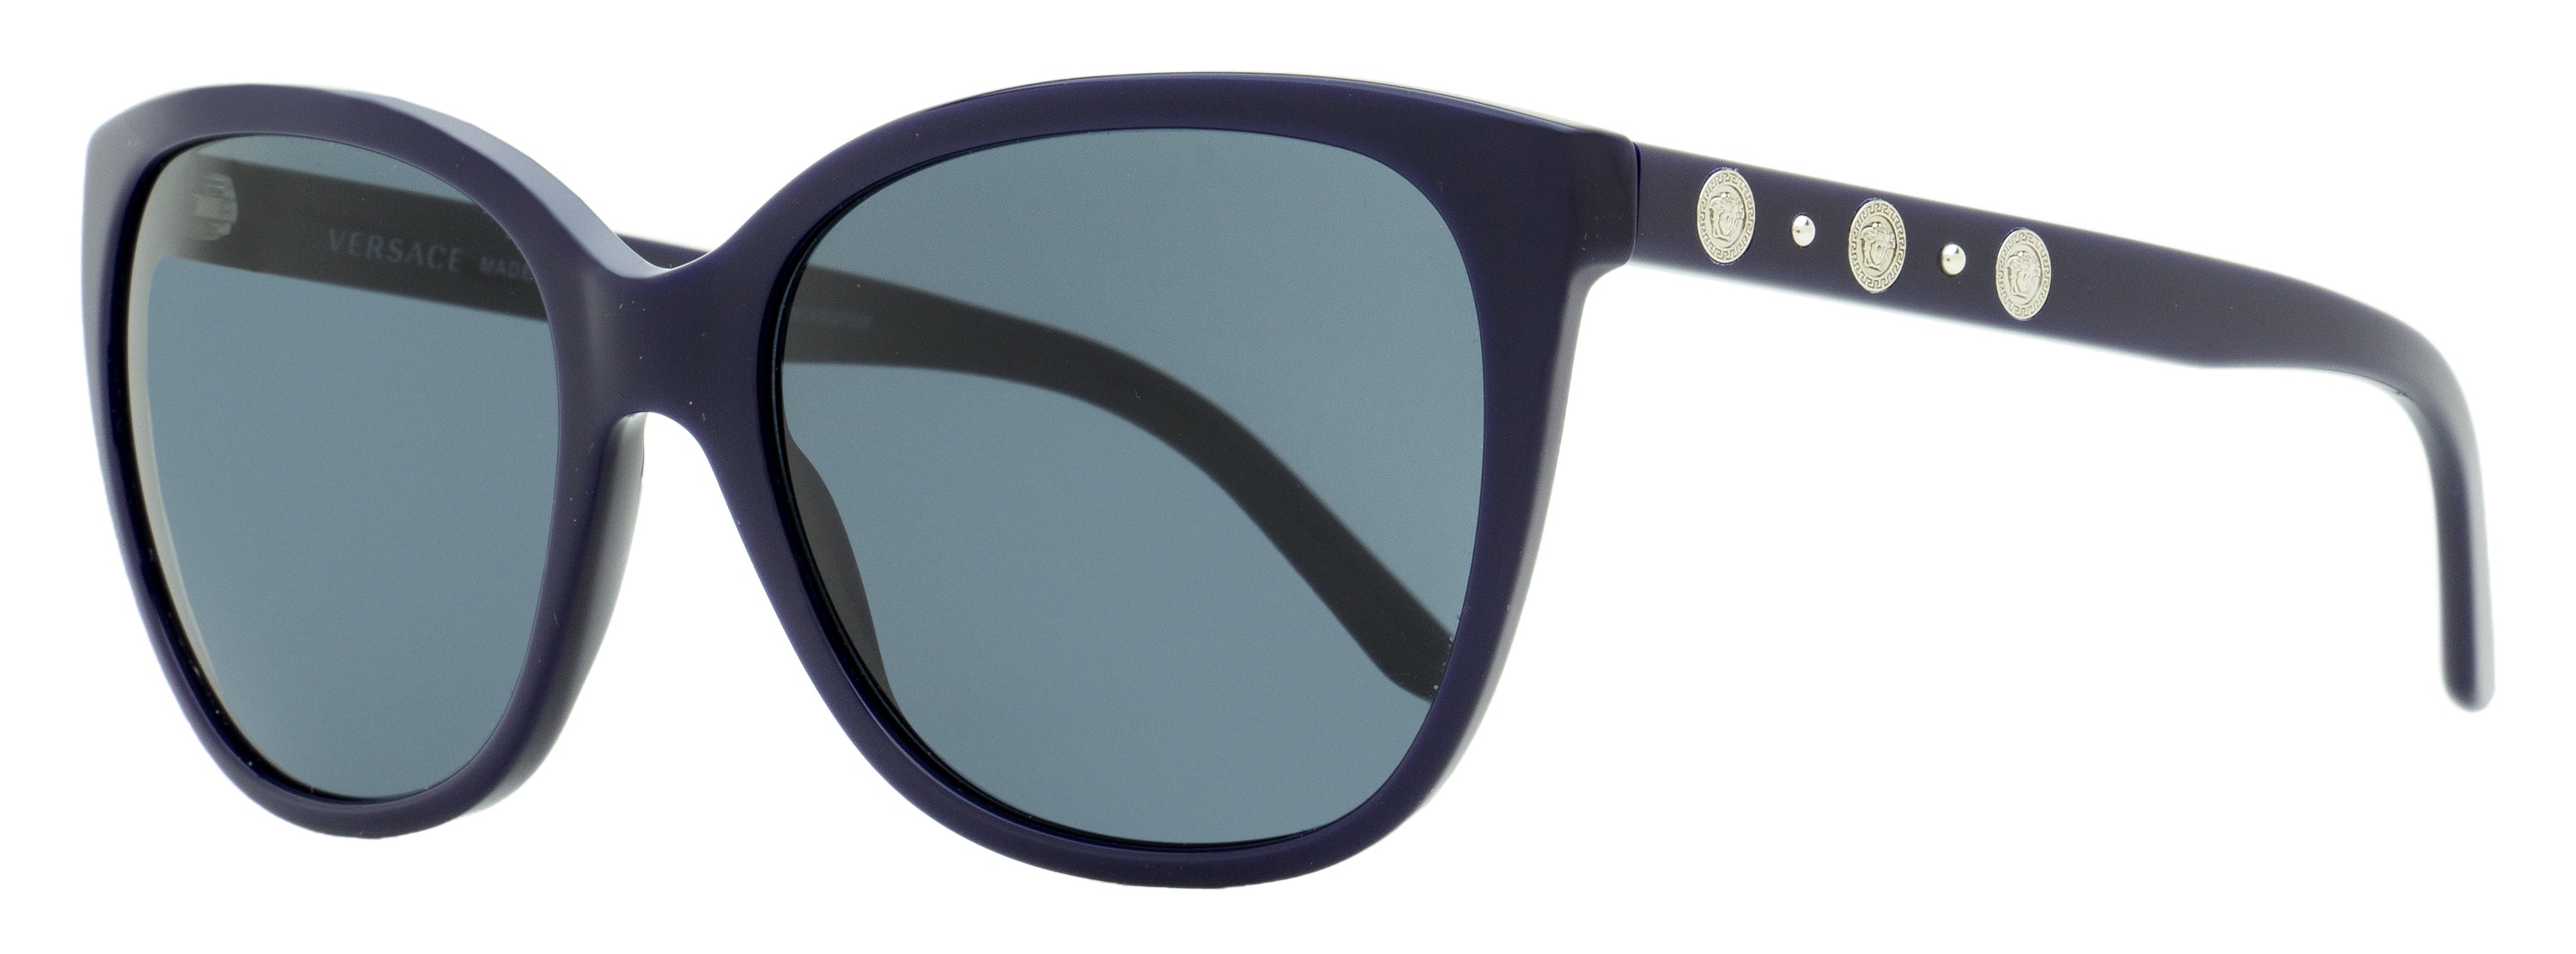 Versace Women's Square Sunglasses VE4281 510787 Dark Blue 57mm female